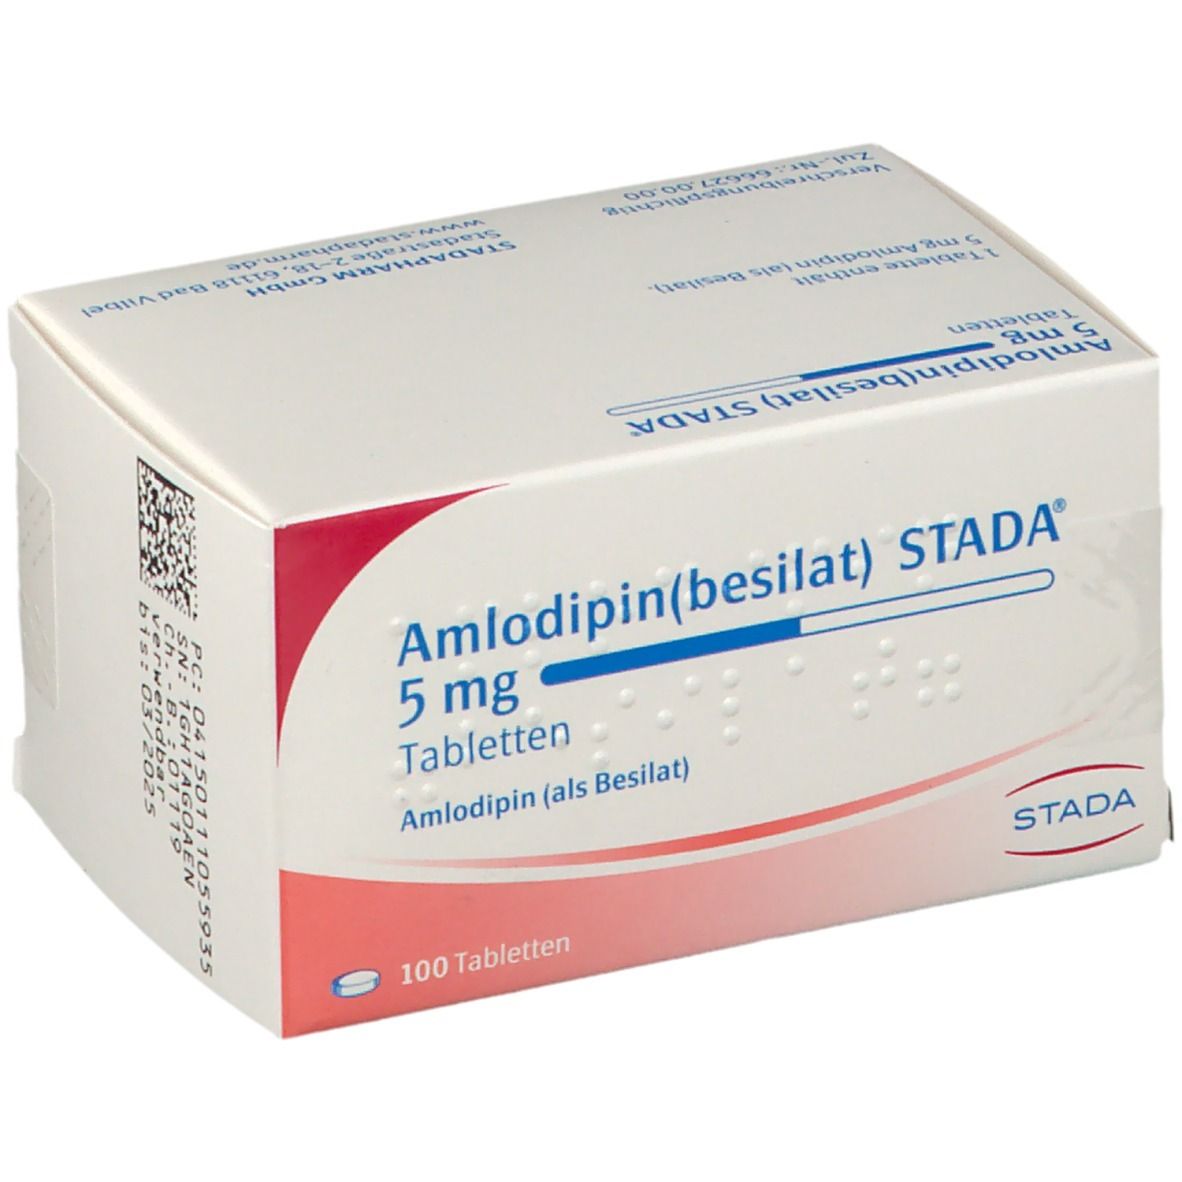 Amilodipin (besilat) STADA® 5 mg